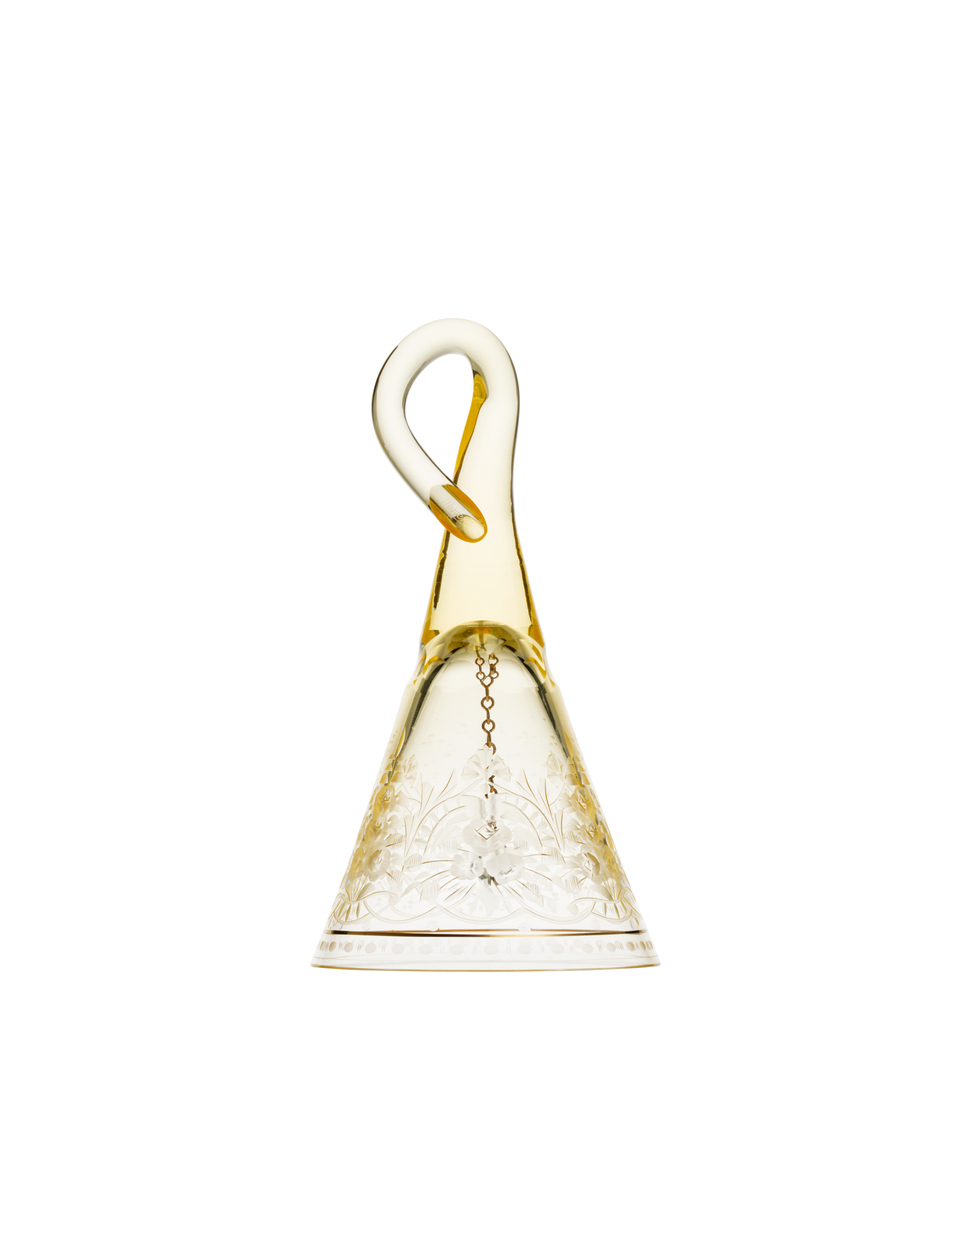 Maharani bell, 15.5 cm